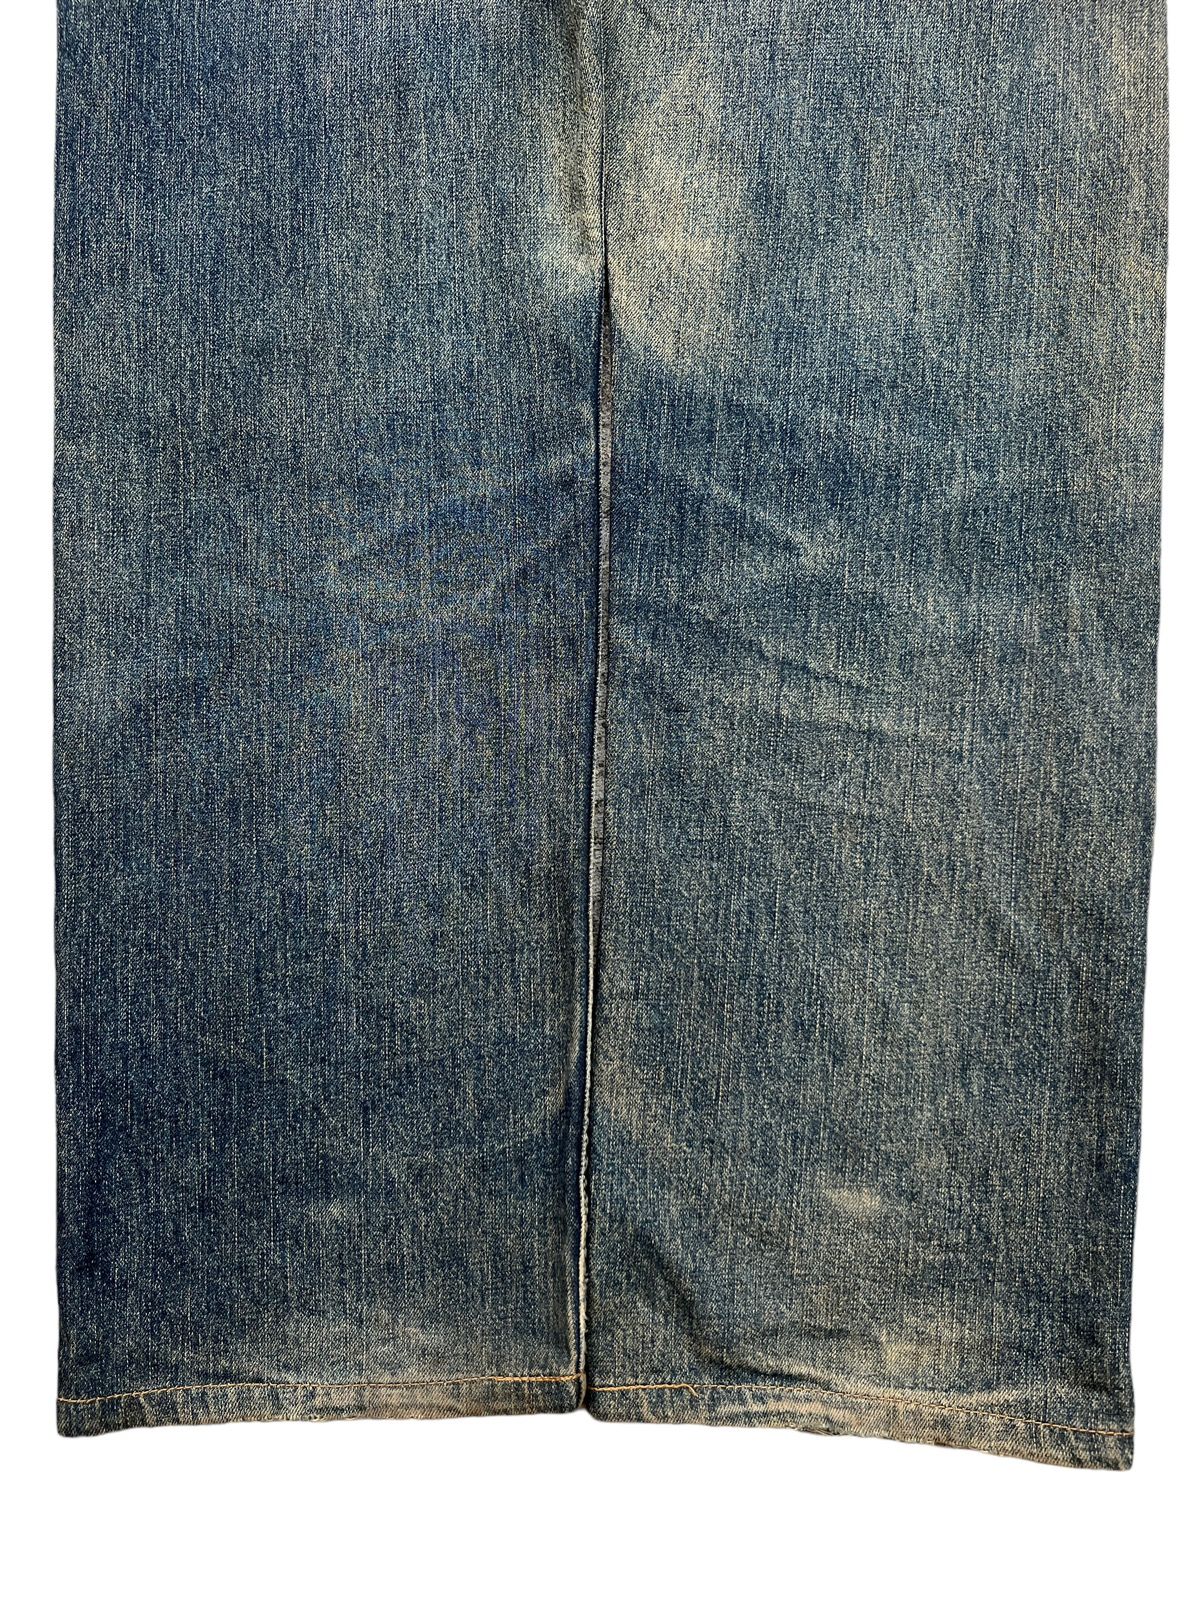 Vintage Levi’s 503 Distressed Rusty Denim Jeans 30x32 - 6